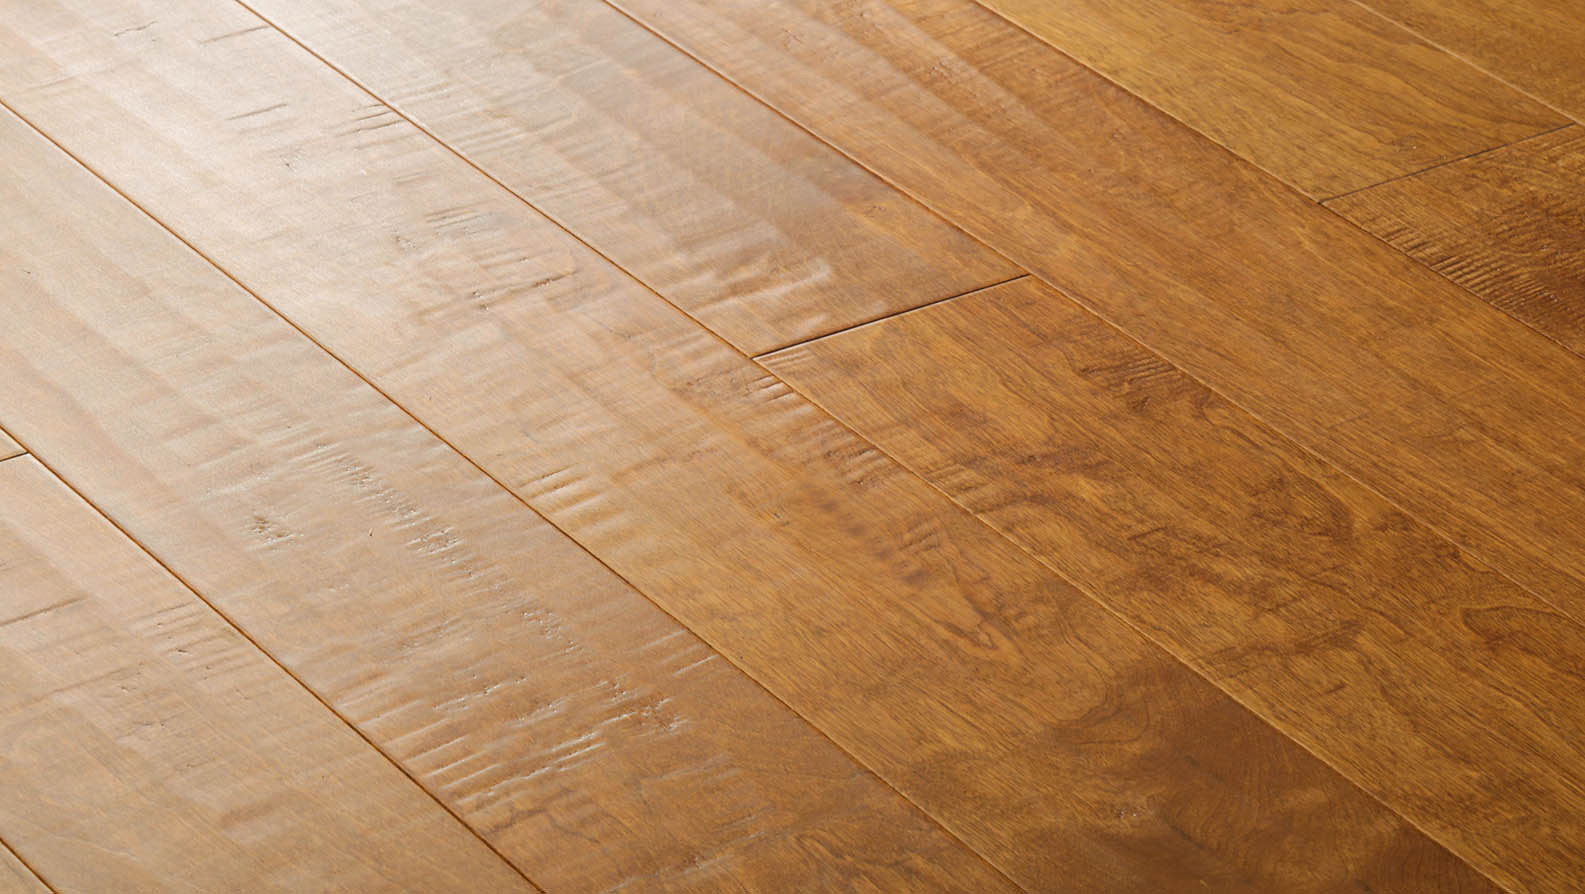 hardwood floor hardness index of hardwood flooring in 20161101152941 8994